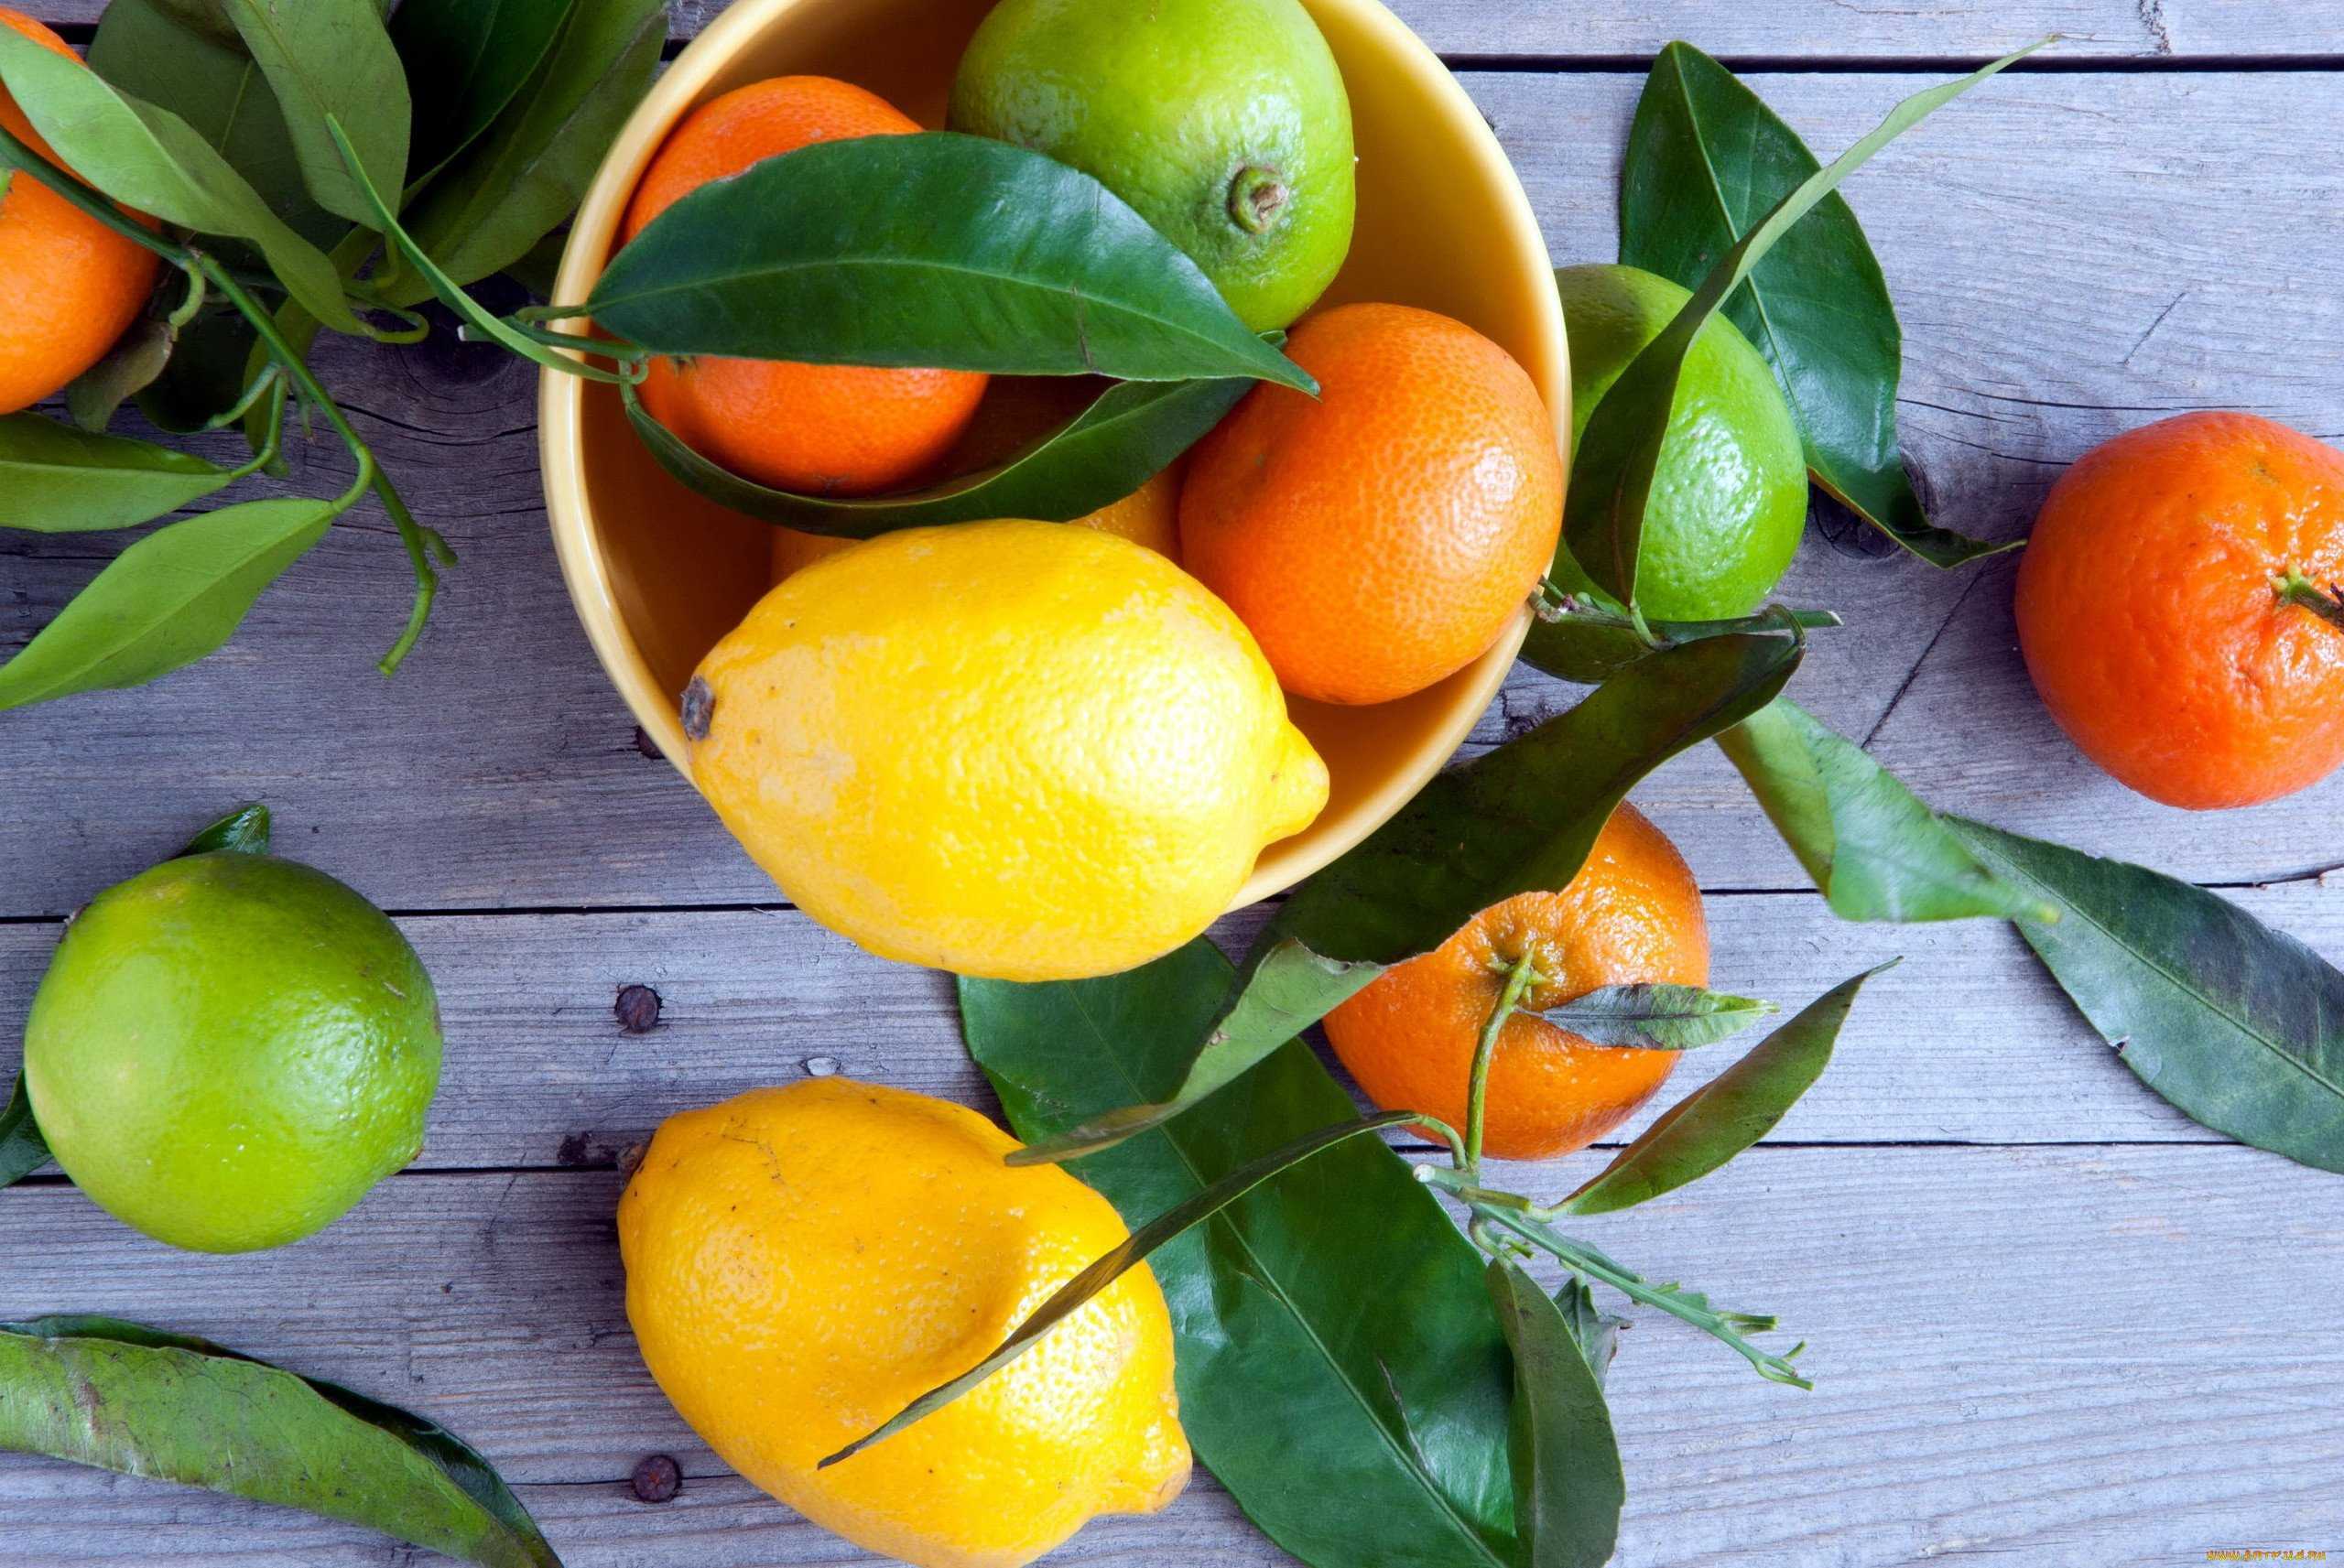 День апельсина и лимона картинки. Цитрус мандарин +апельсин. Померанца и цитрона. Цитрон цитрусовые. Лимон Citrus Limon.